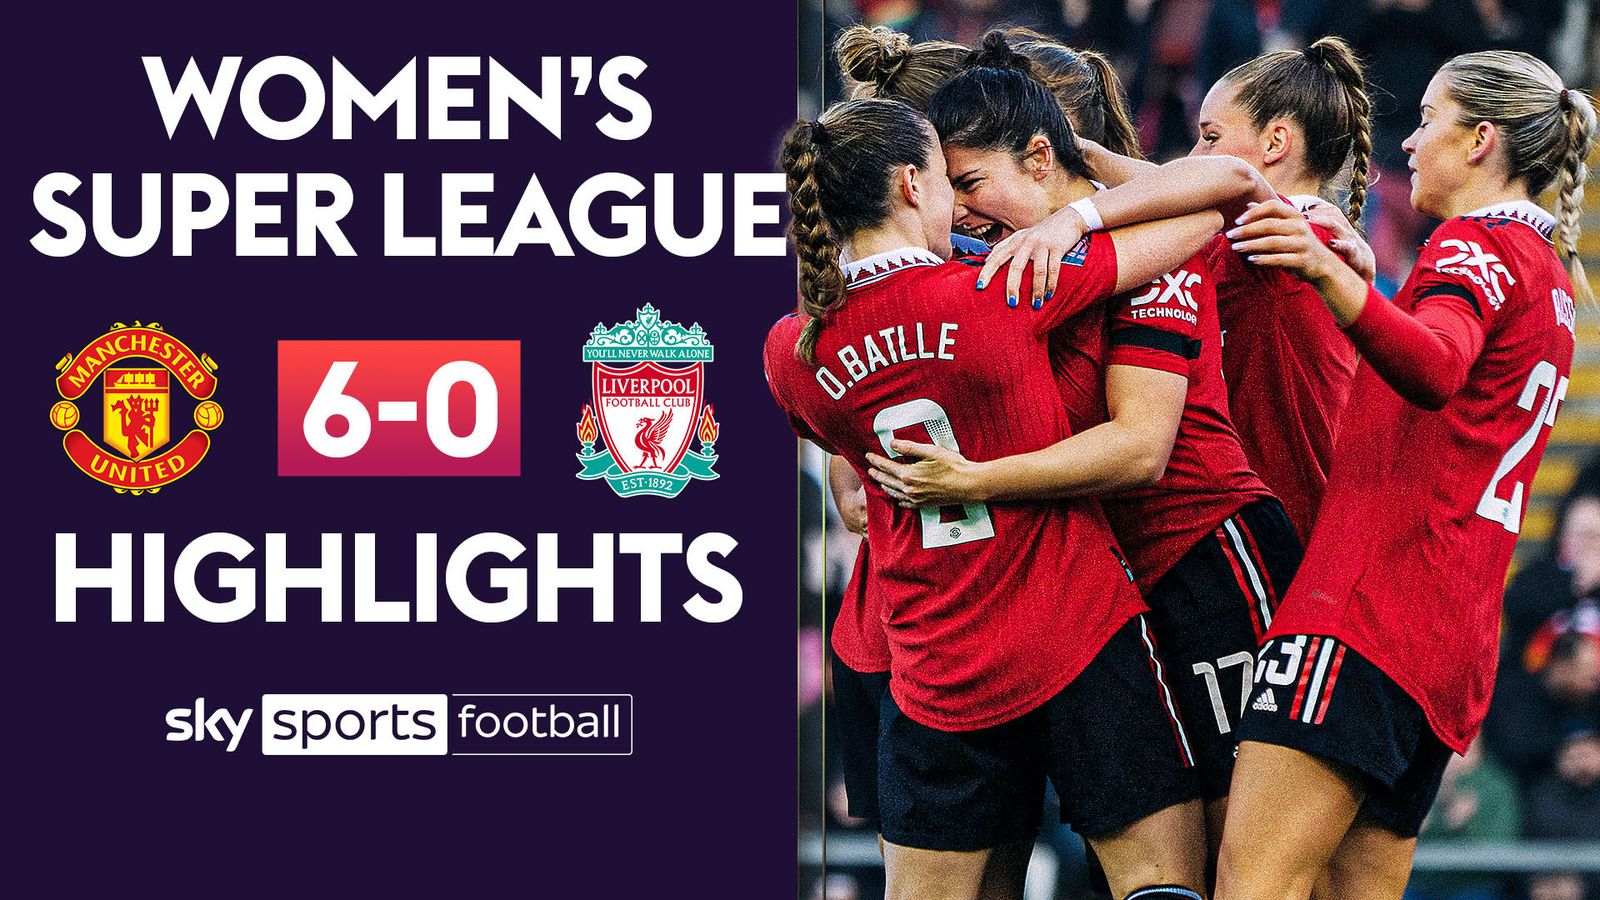 Man United Women 6 0 Liverpool Women Match Report And Highlights